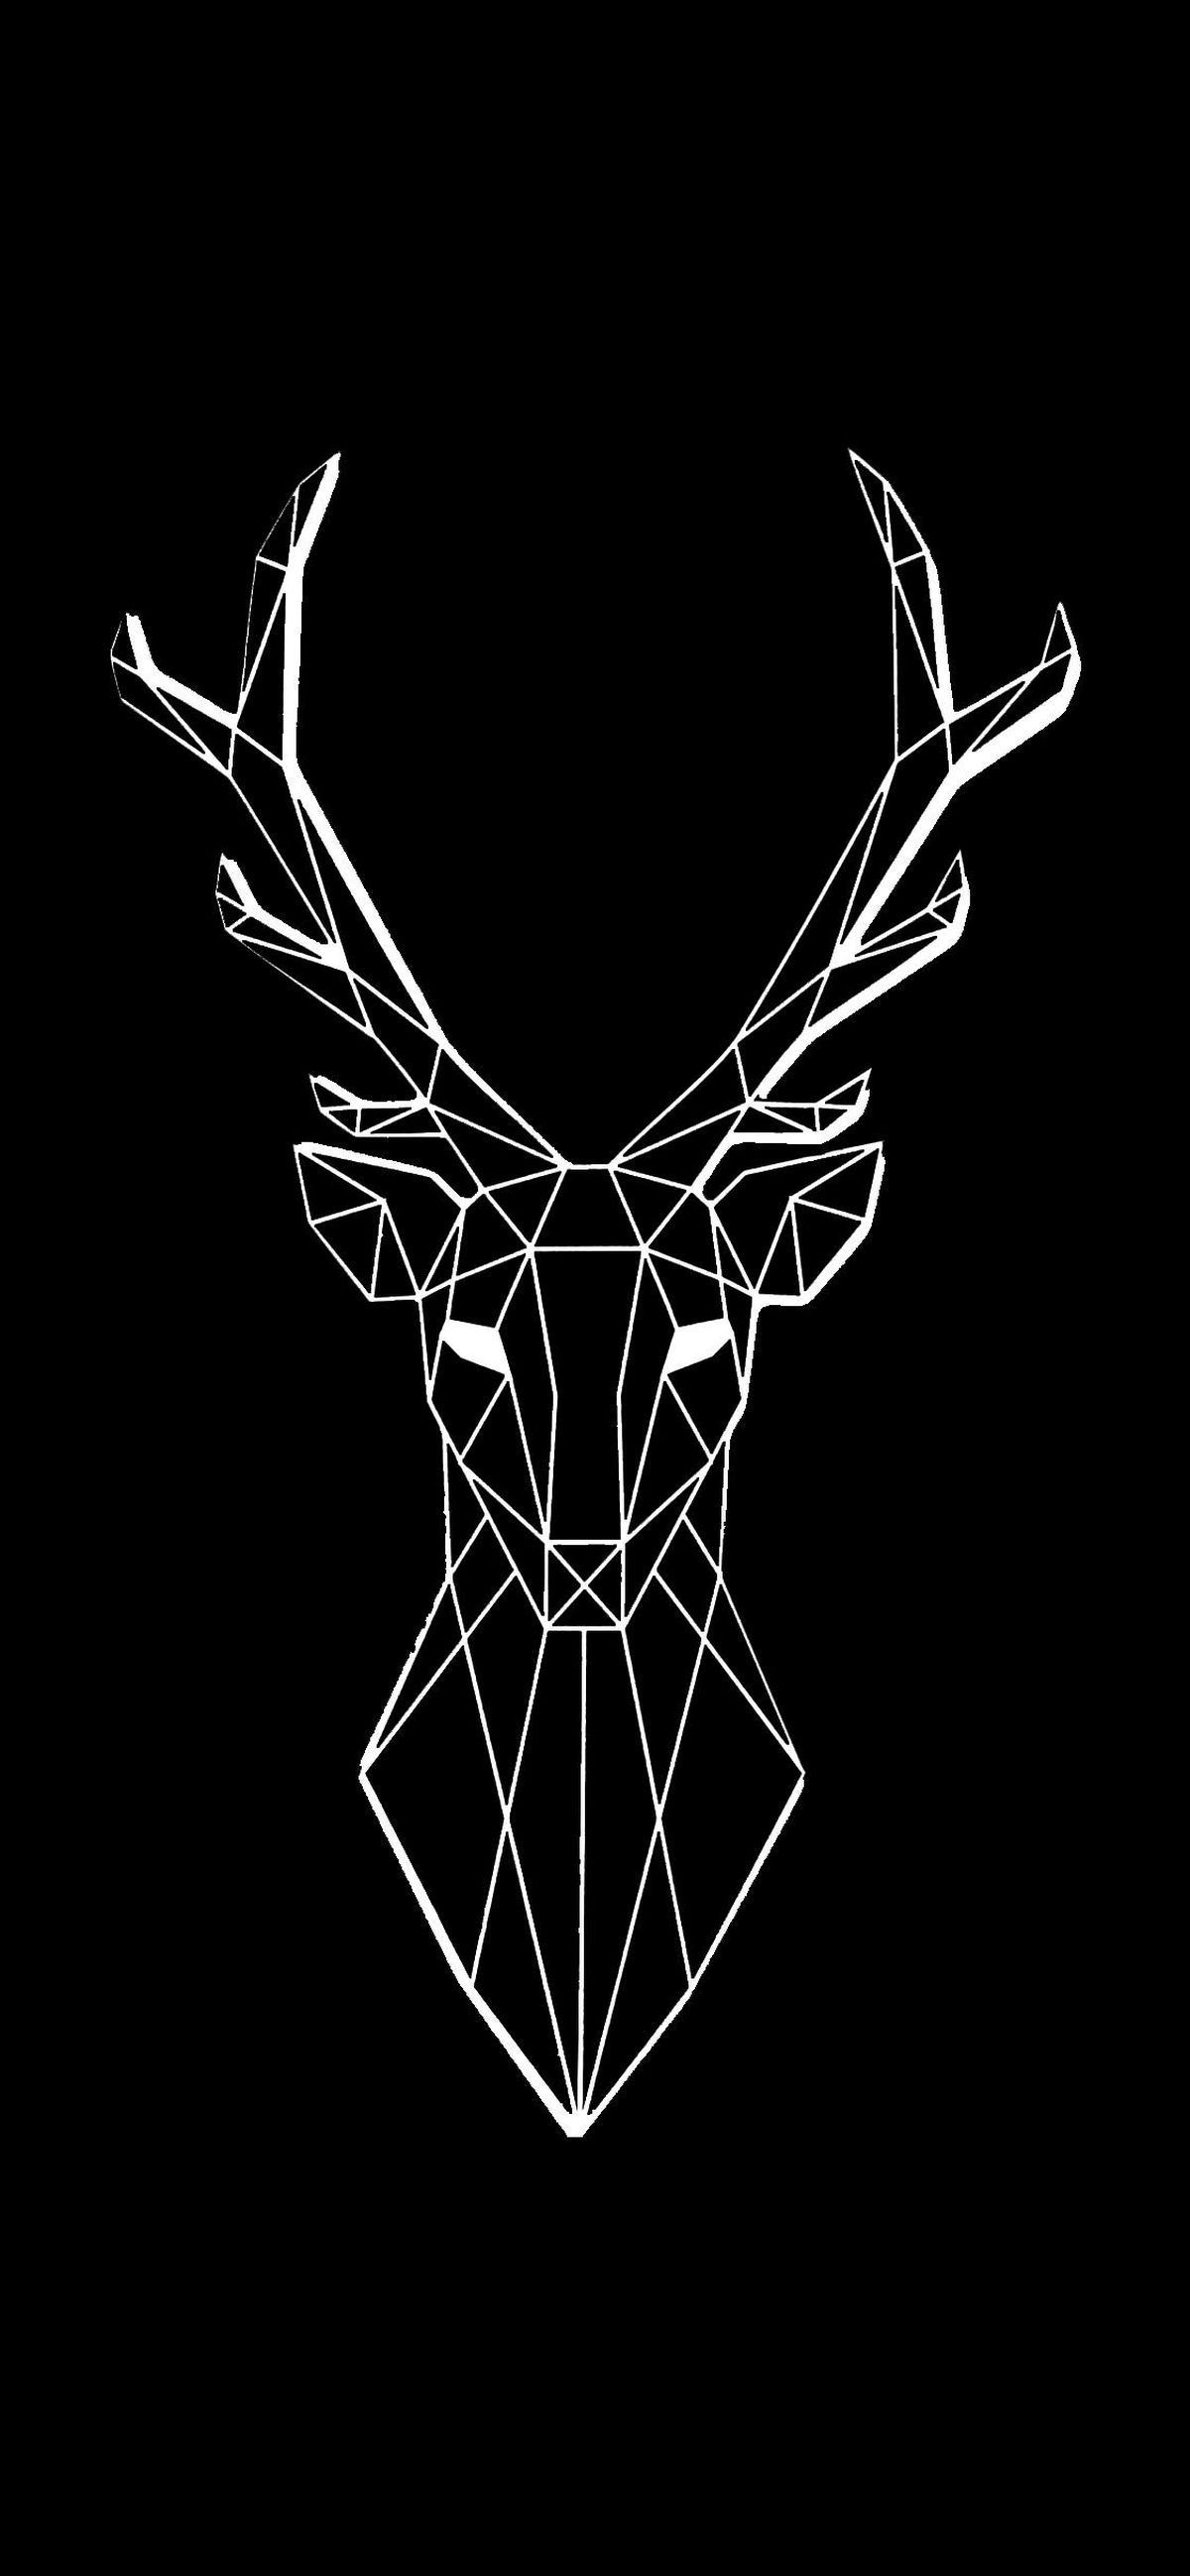 Deer Black And White Wallpaper Top